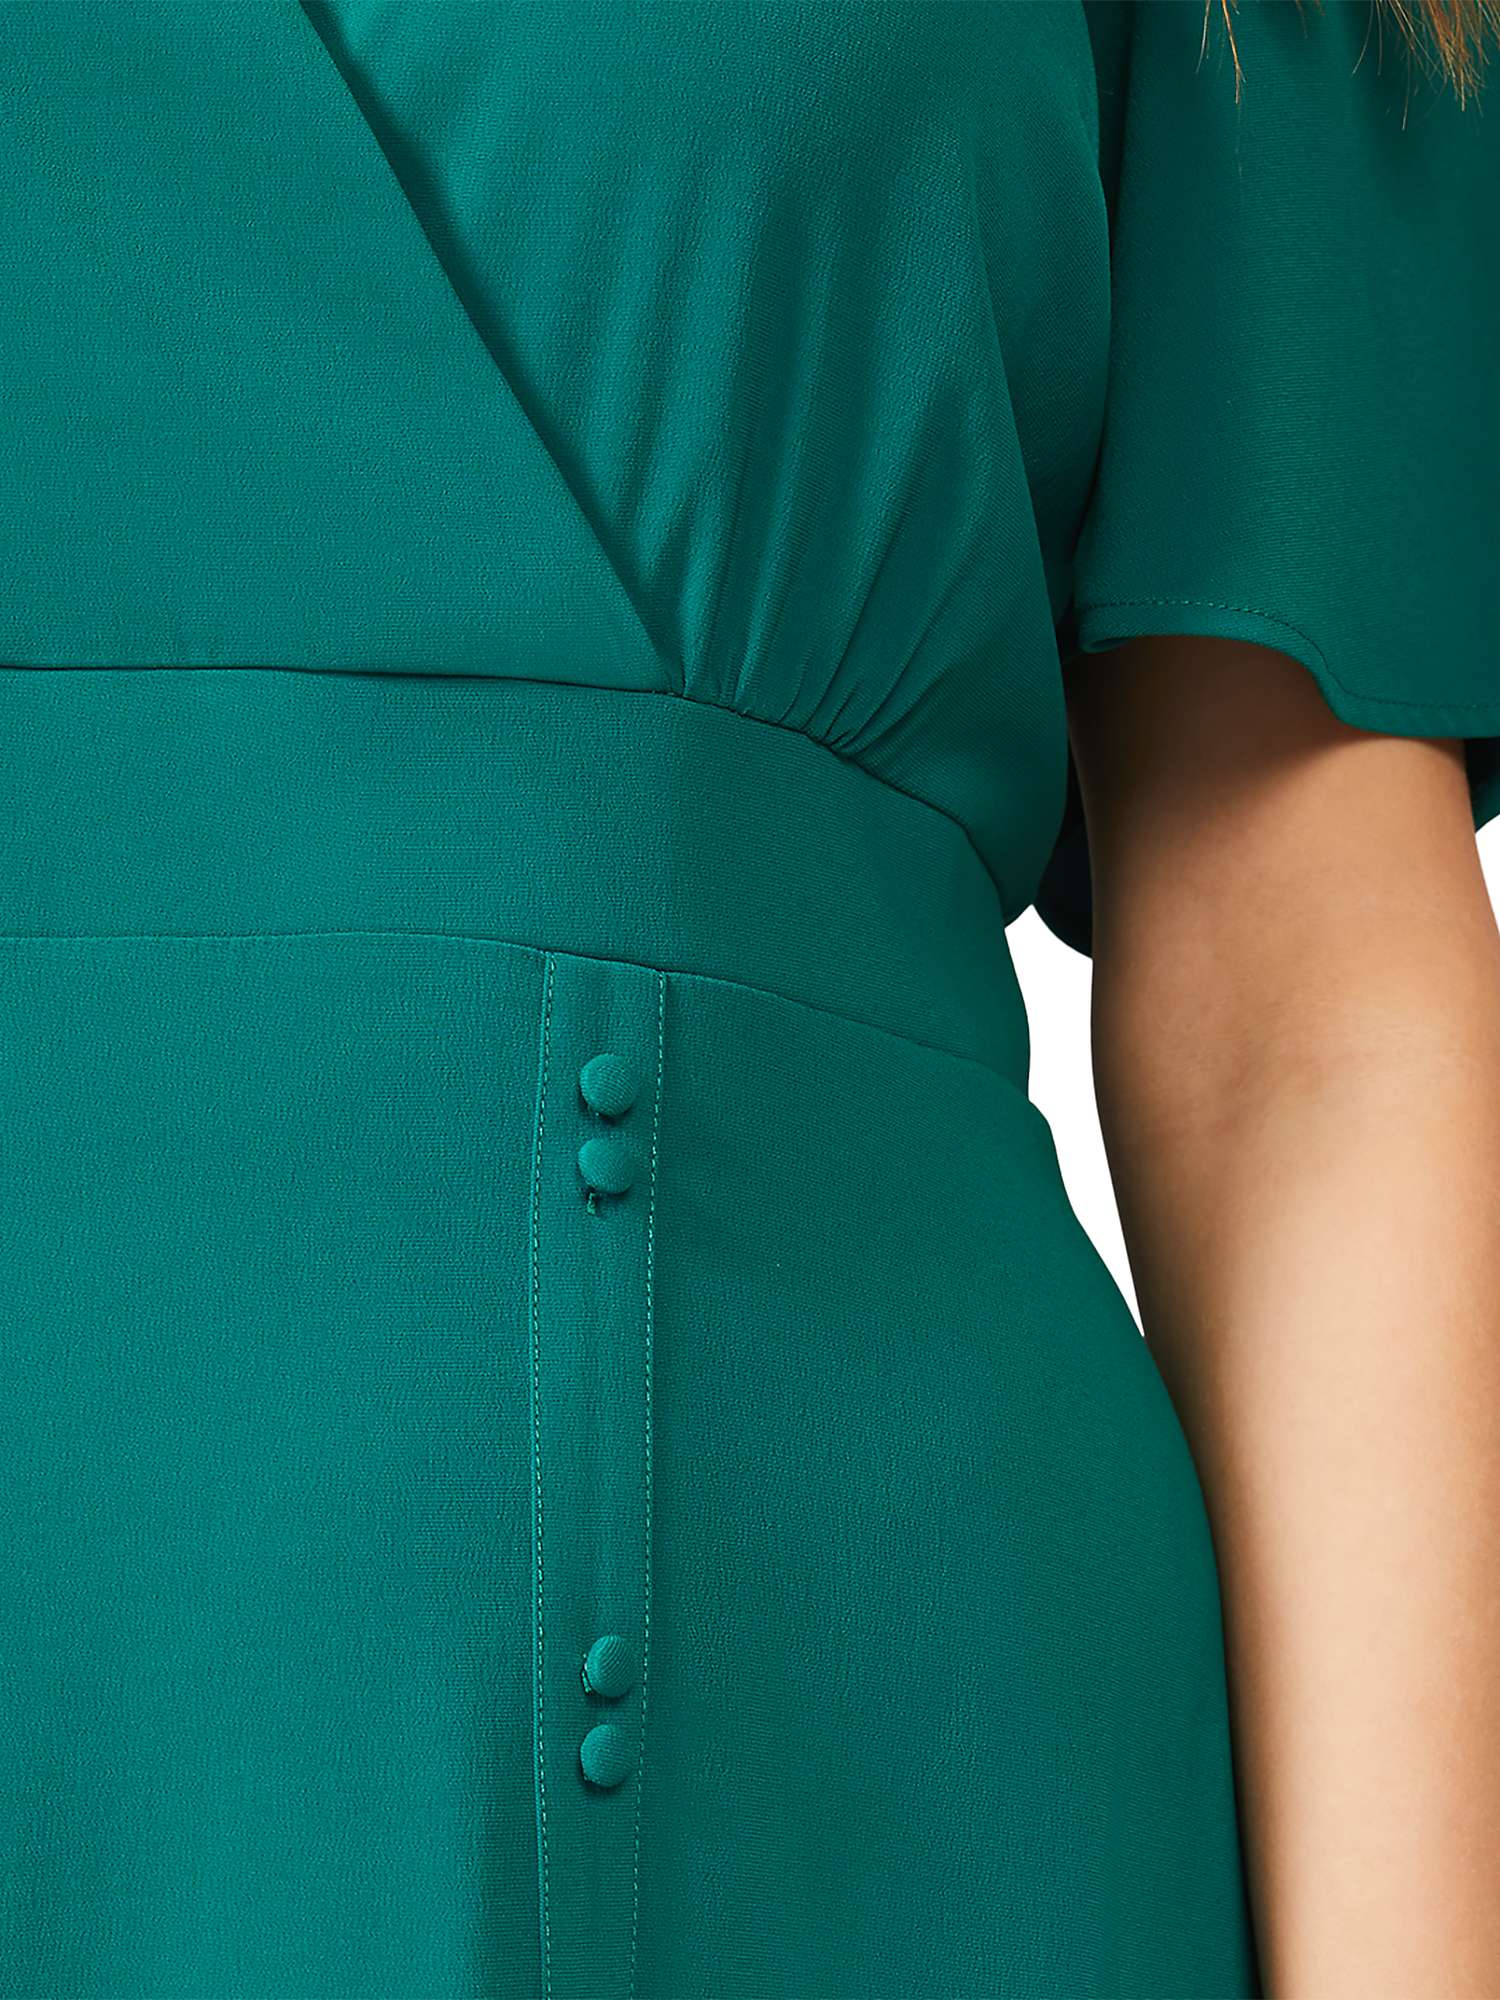 Buy Studio 8 Hosana V-Neck Button Detail Dress, Green Online at johnlewis.com